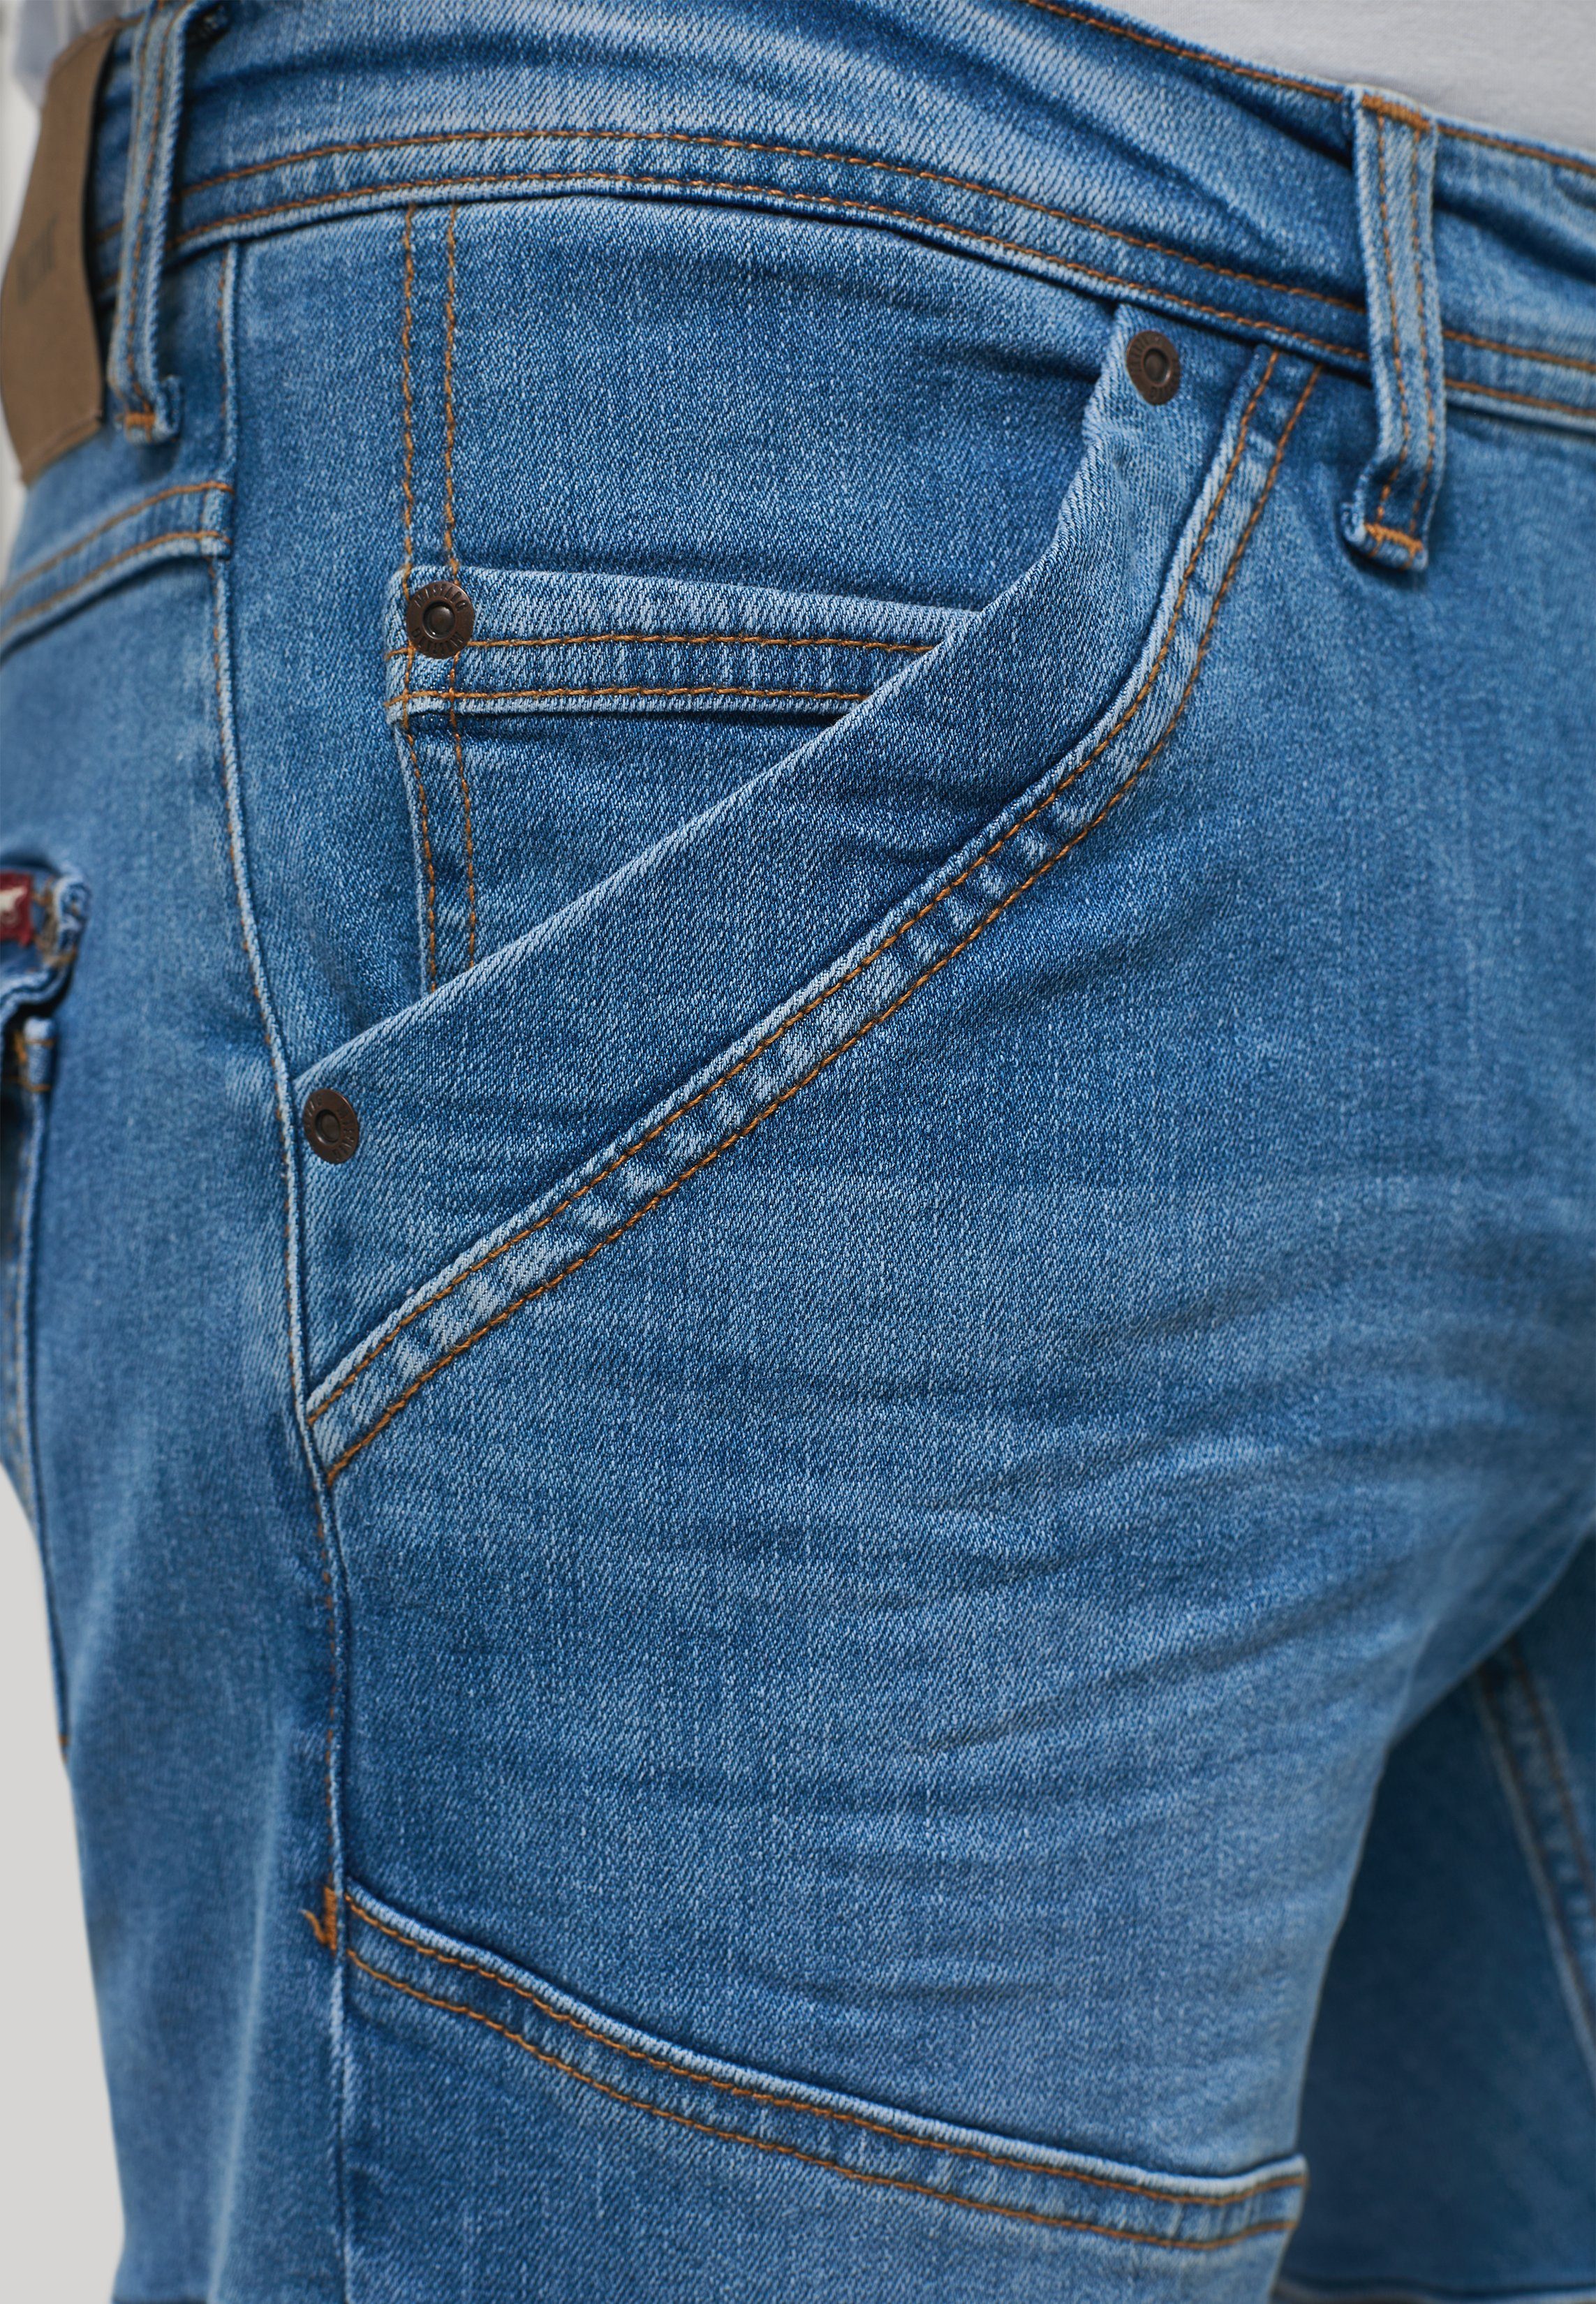 Shorts Jeansshorts Style Fremont blau-5000583 MUSTANG